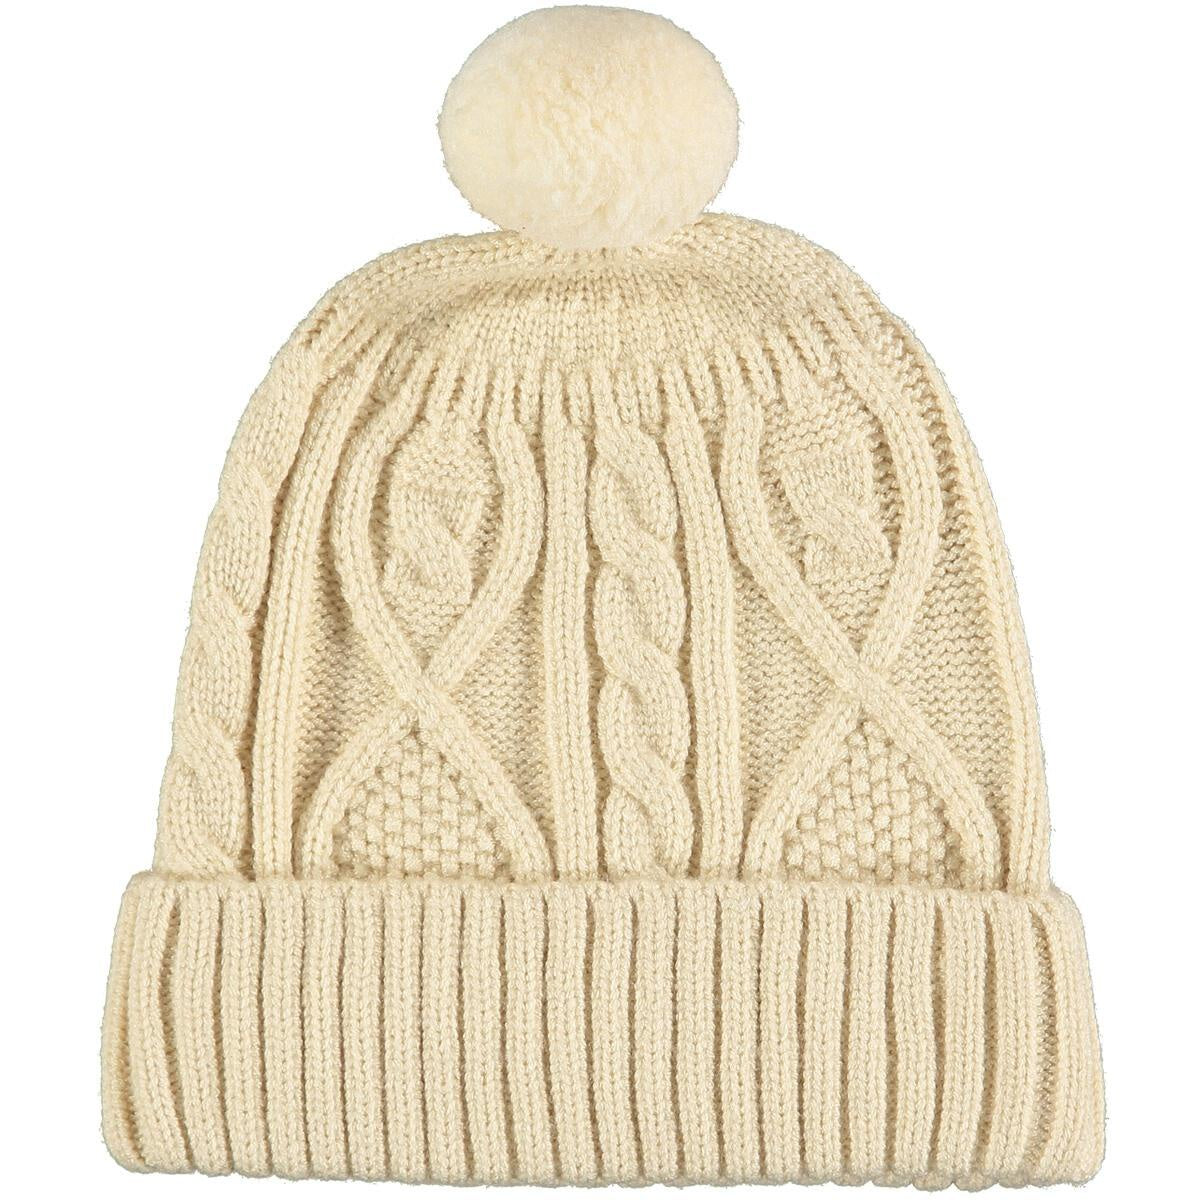 Vignette Cream Moddy Knit Hat V962E 5007